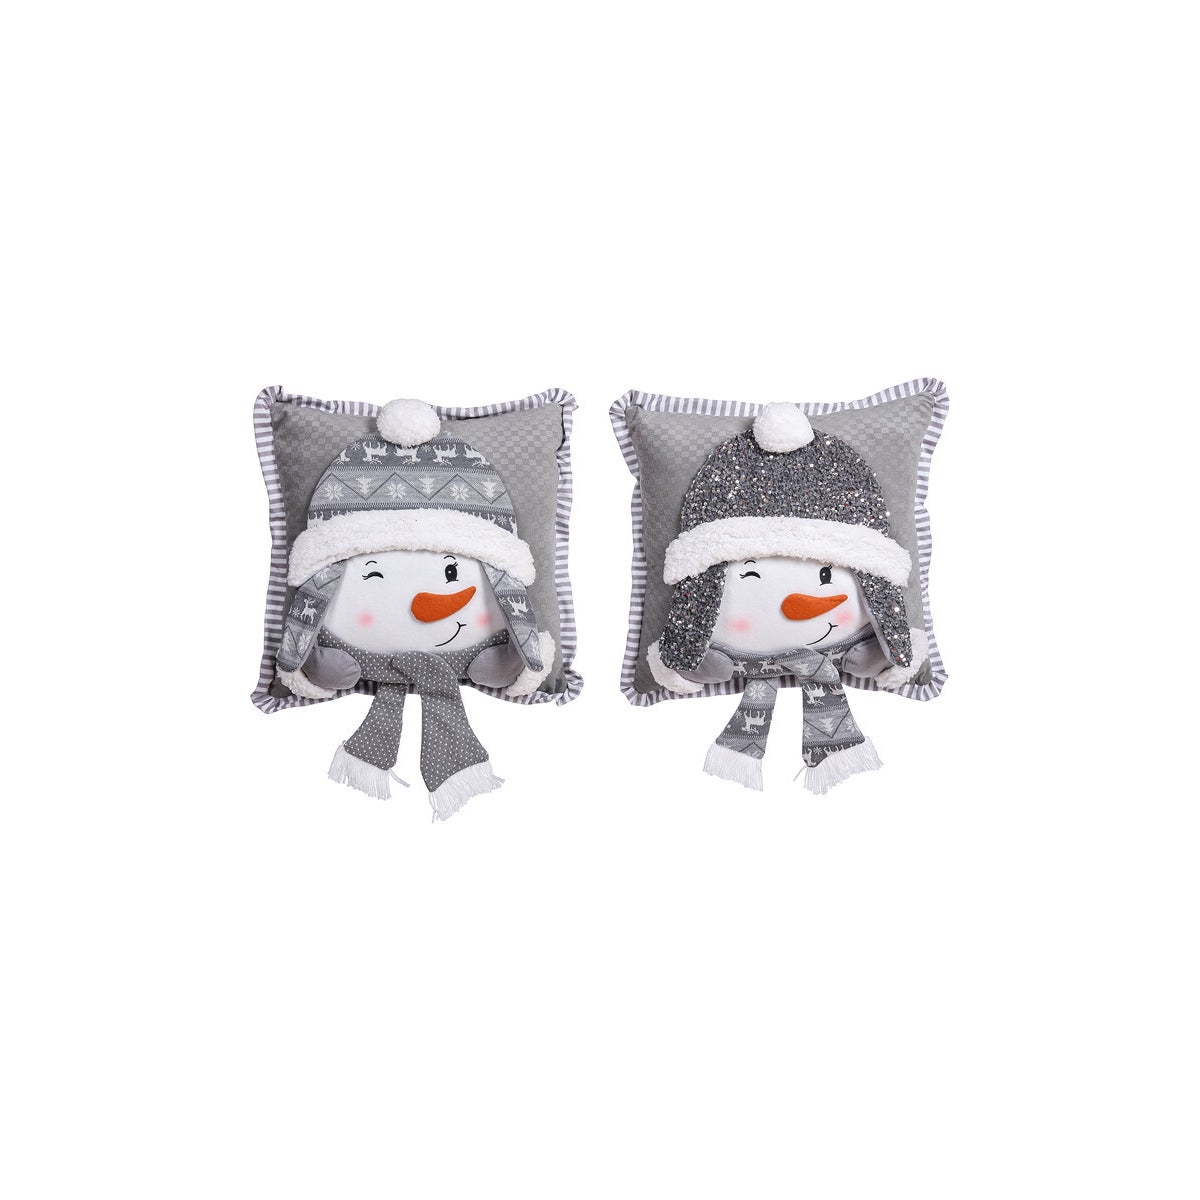 Pil Gry/Wht Knit Snowman 2 Asst